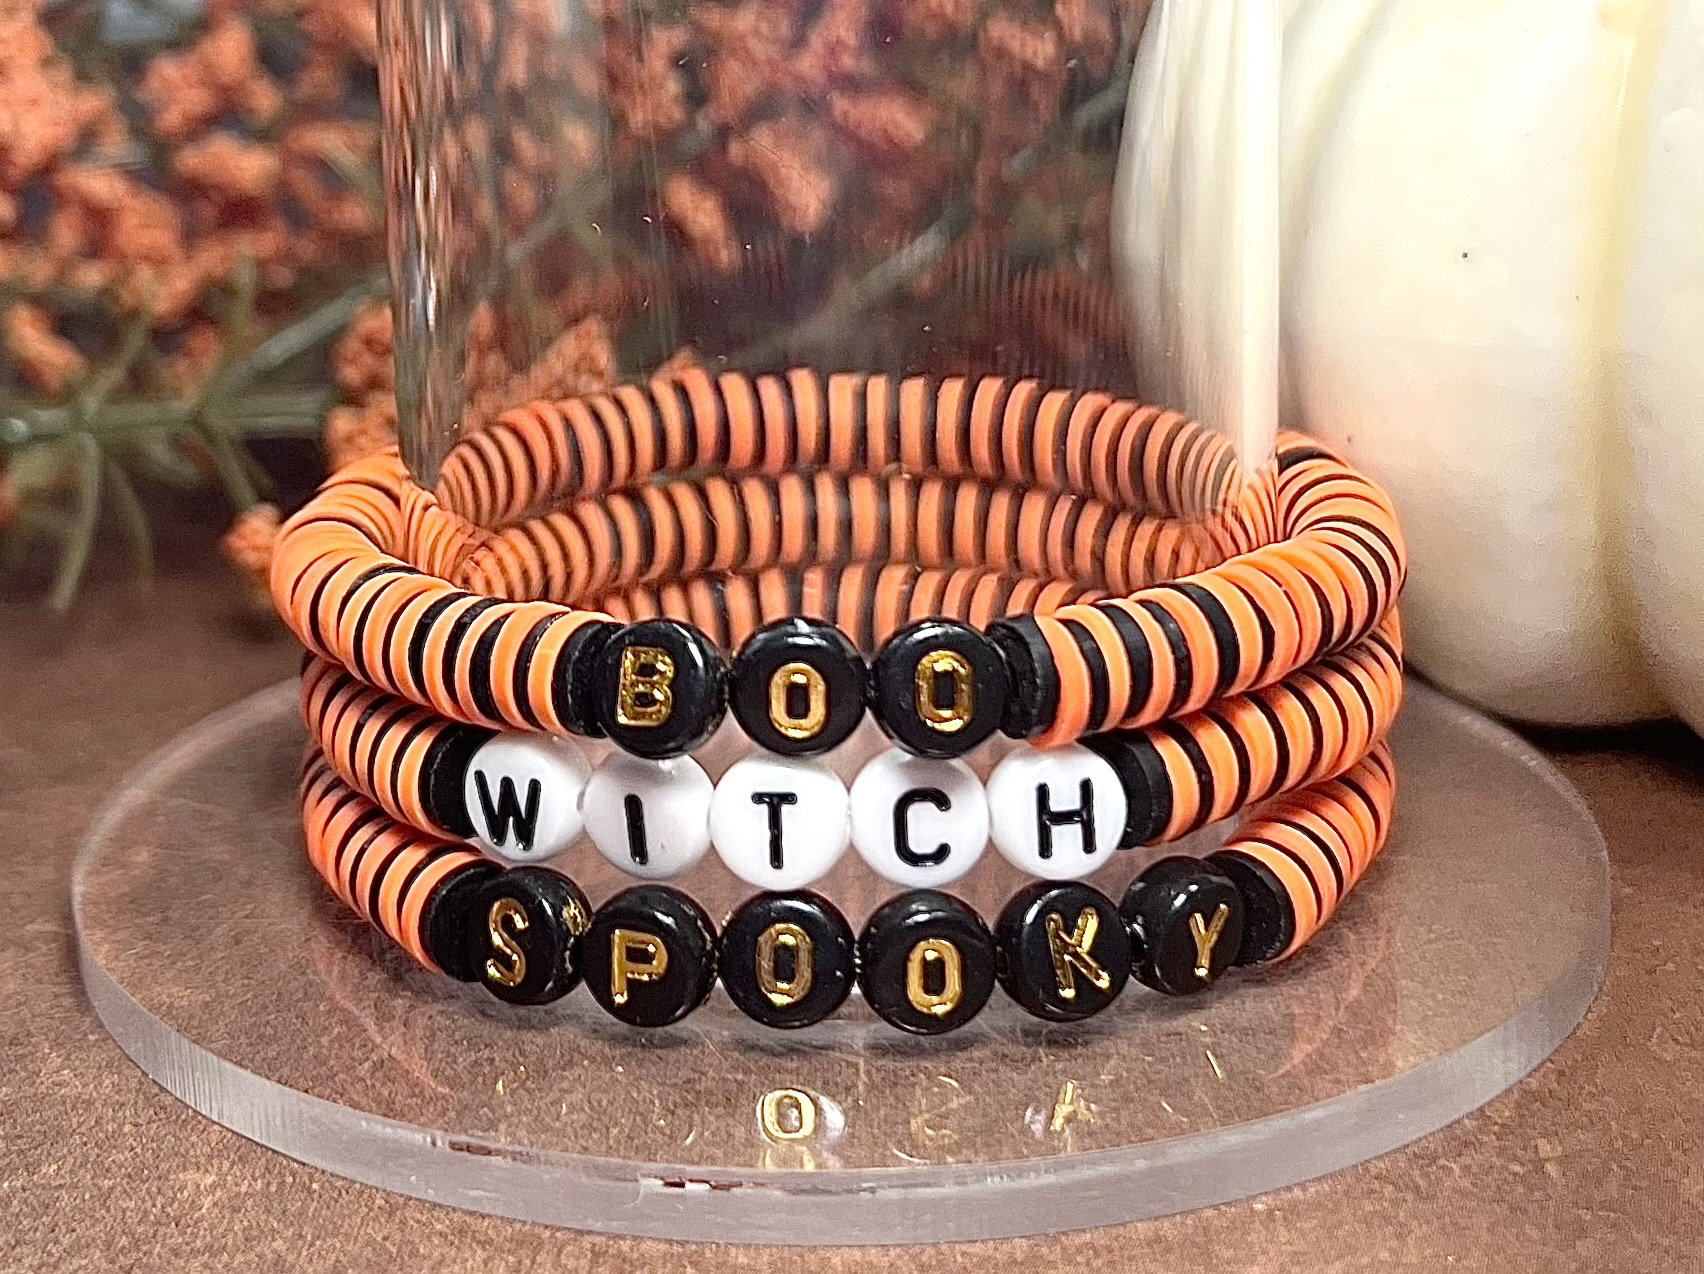 Disney Halloween Clay Bead Bracelet. Says Boo, Orange and Black Clay Beads